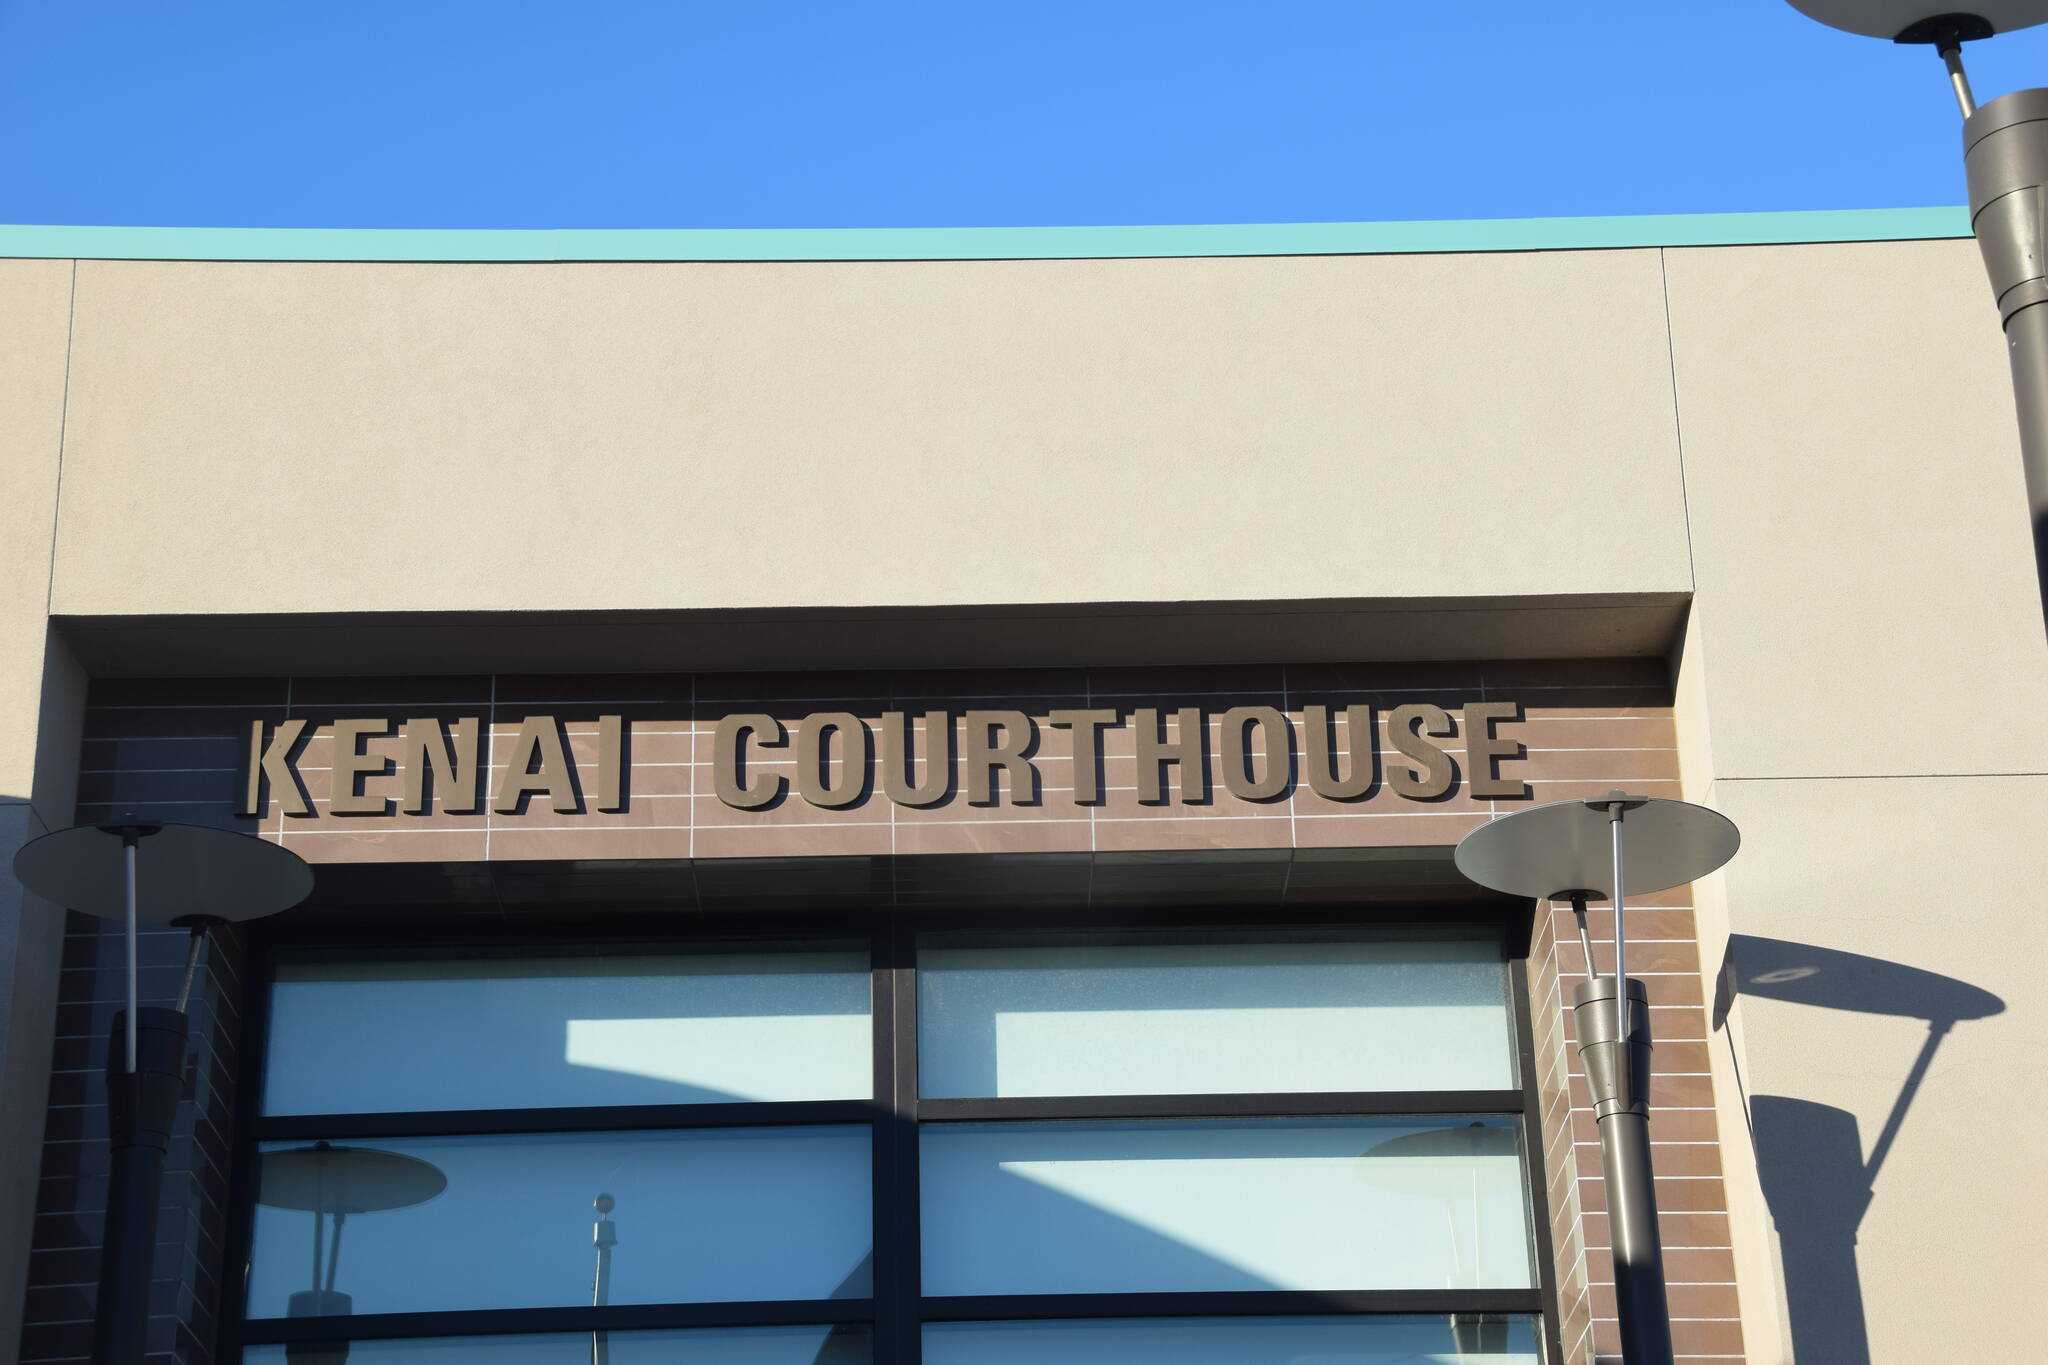 Kenai Courthouse is photographed on February 26, 2019 in Kenai, Alaska. (Clarion file)